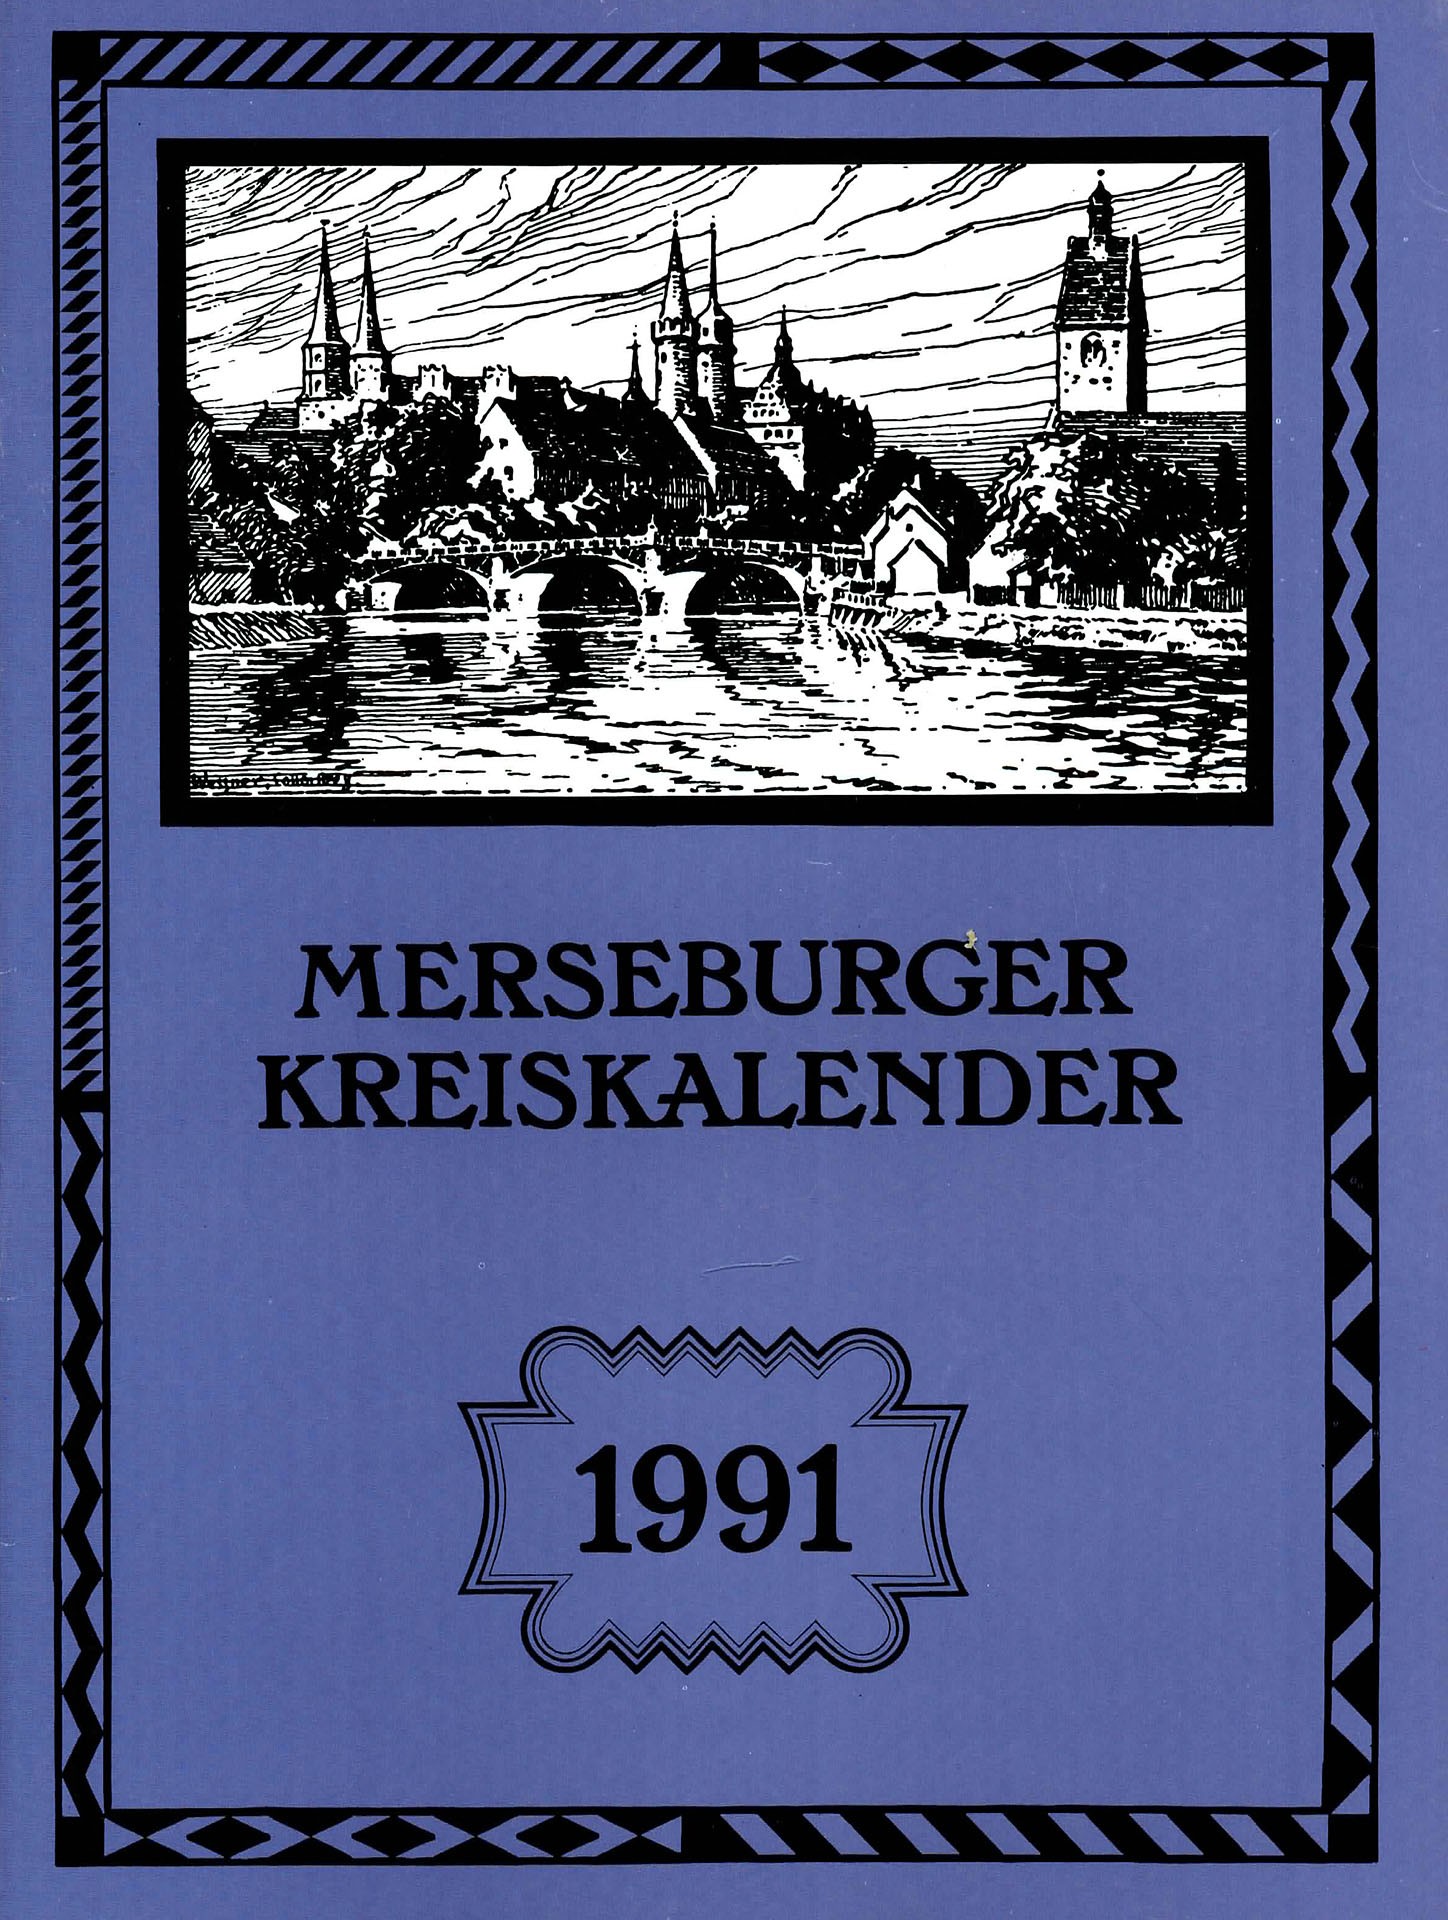 Merseburger Kreiskalender 1991 - Kleinbauer, Dieter / Müller, Andreas